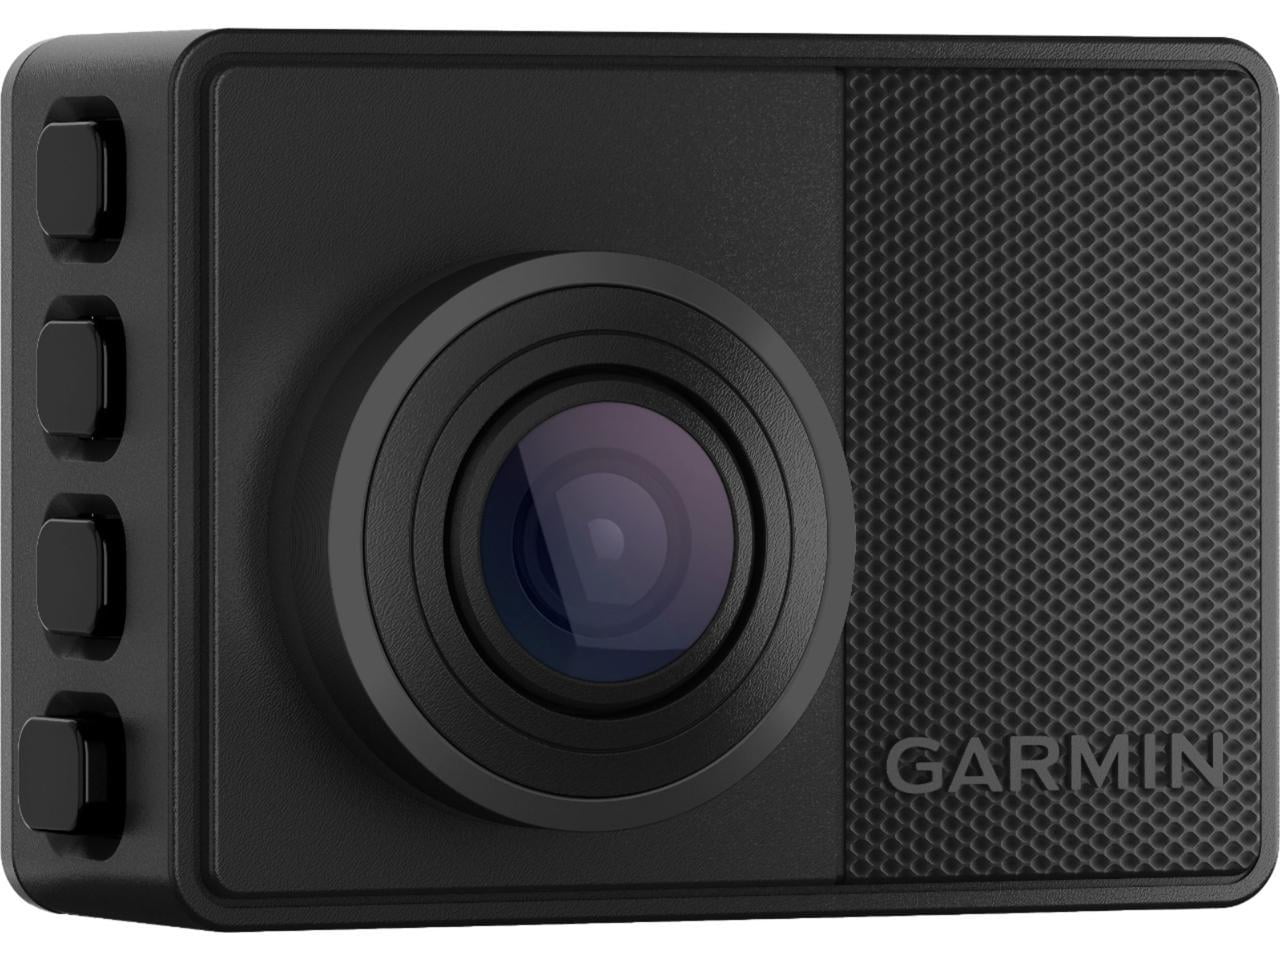 Garmin 67W 1440p Black Dash Cam